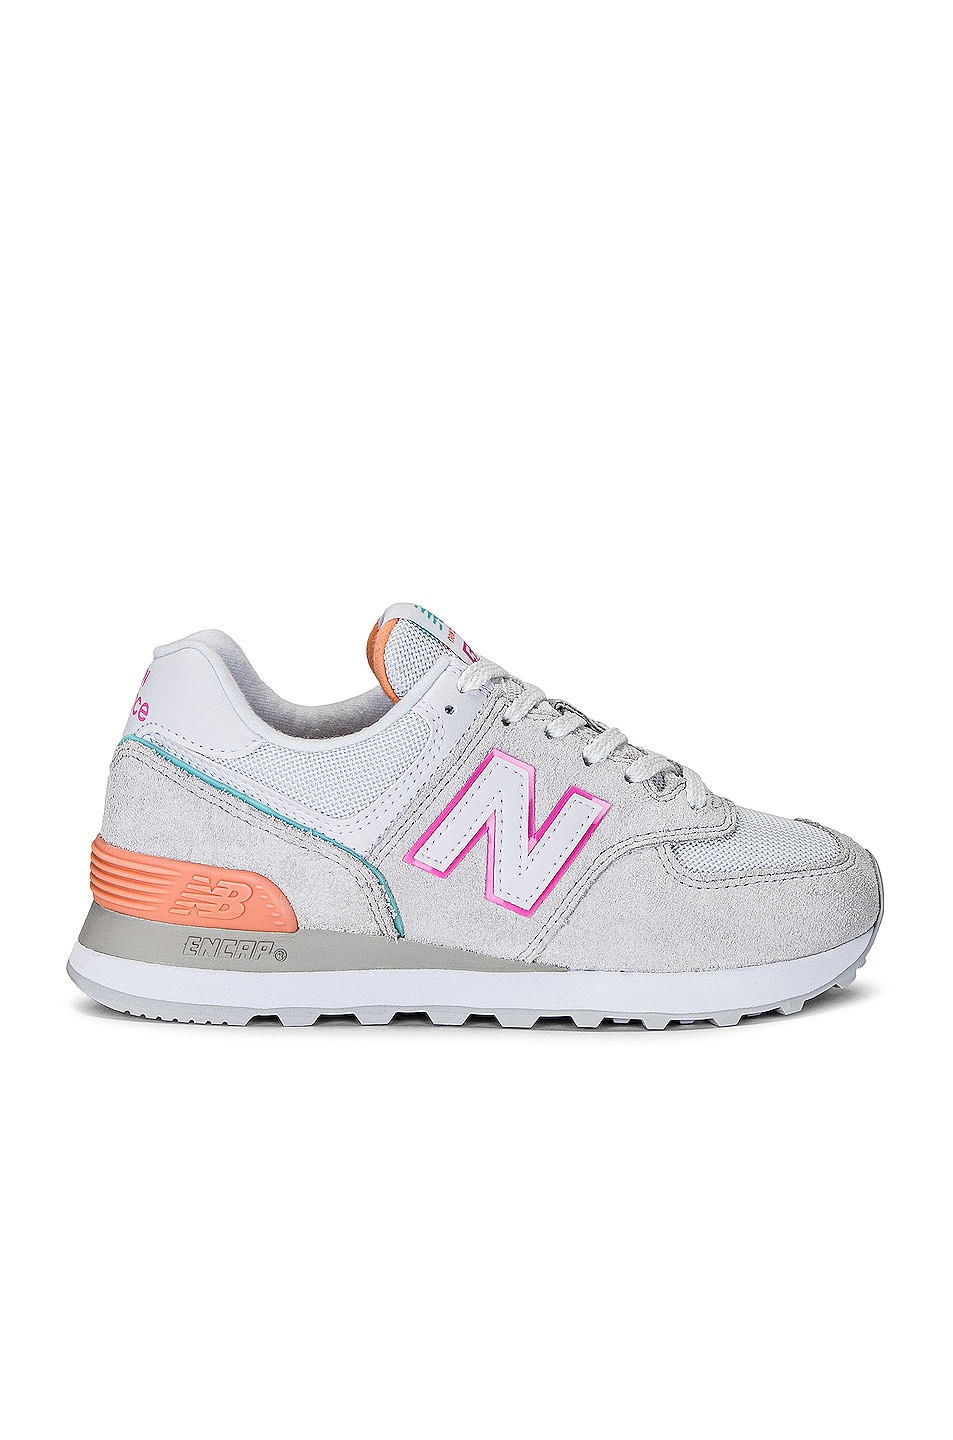 Image 1 of New Balance 574v2 Sneakers in Nimbus Cloud & Peach Glaze